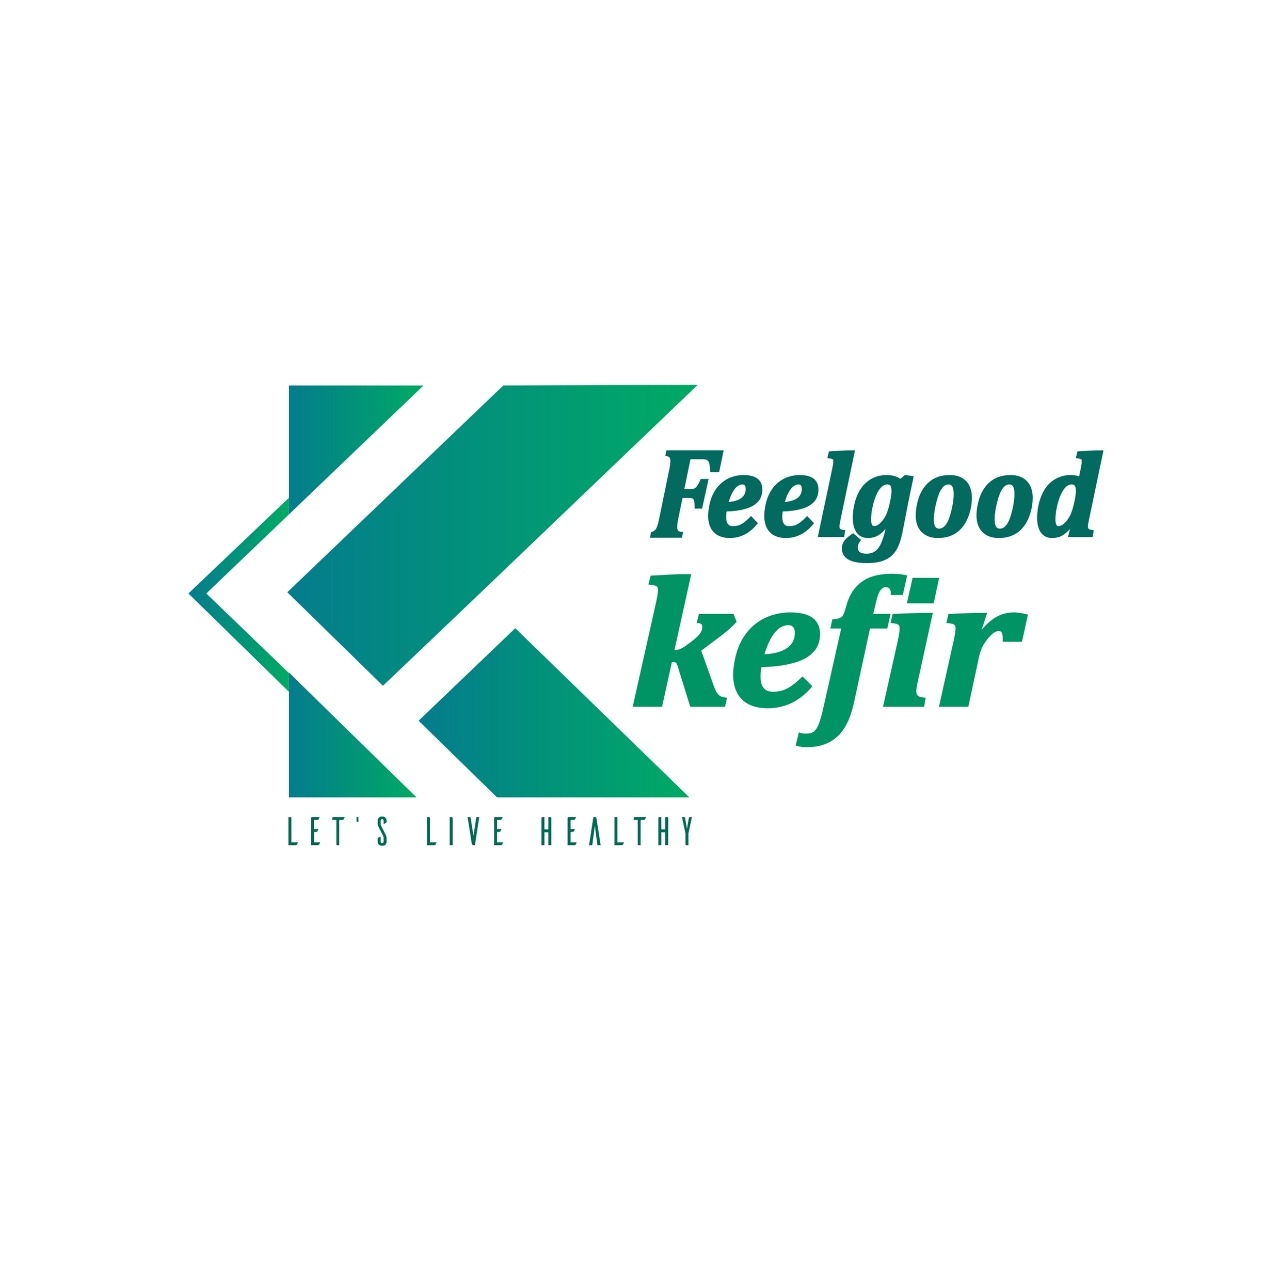 Feelgood kefir log big